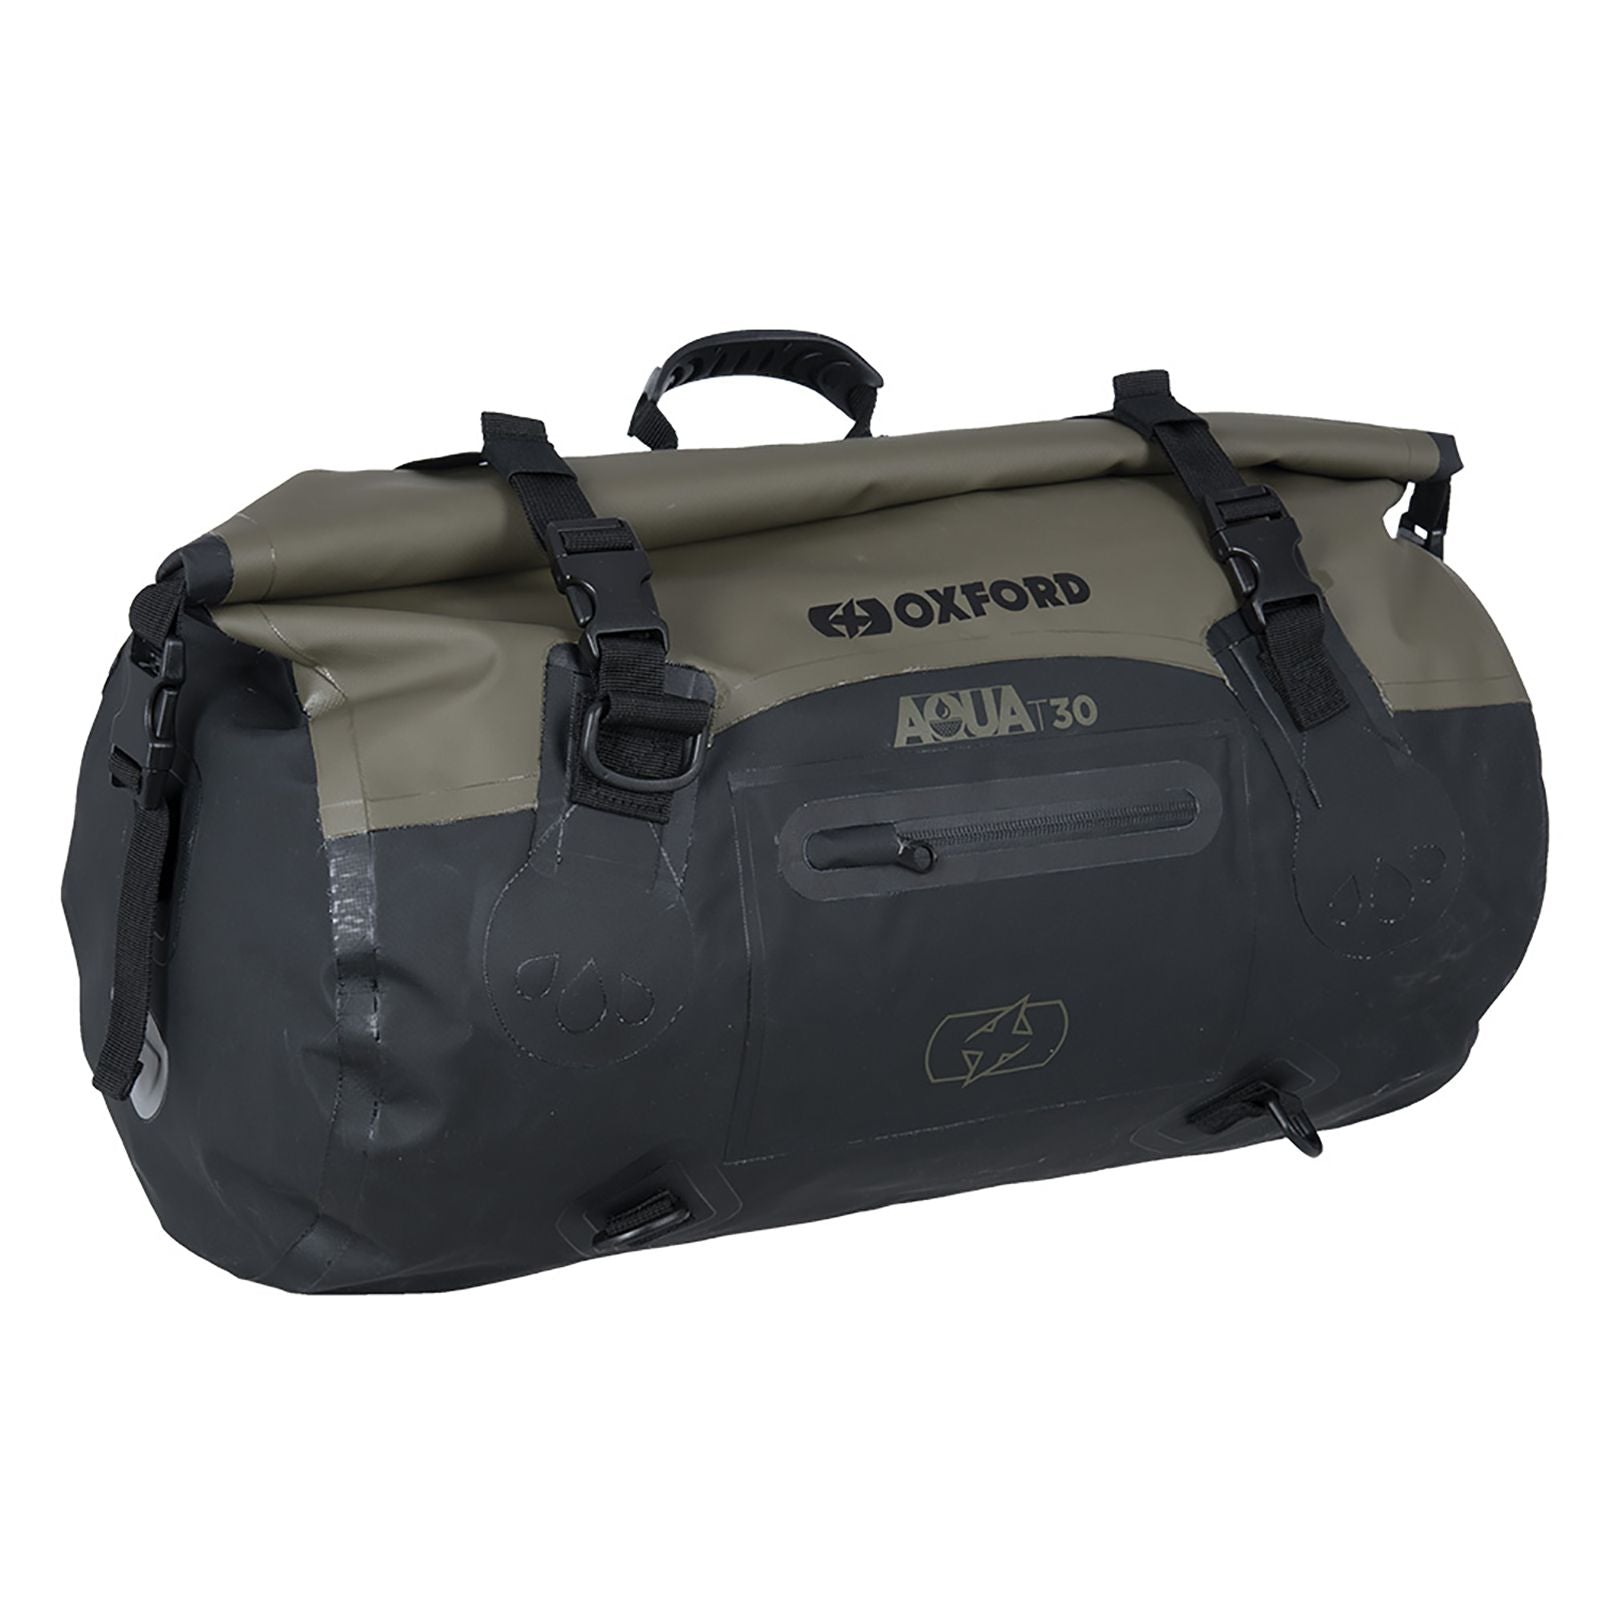 New OXFORD Aqua Roll Bag T30 - Black / Khaki #OXOL401